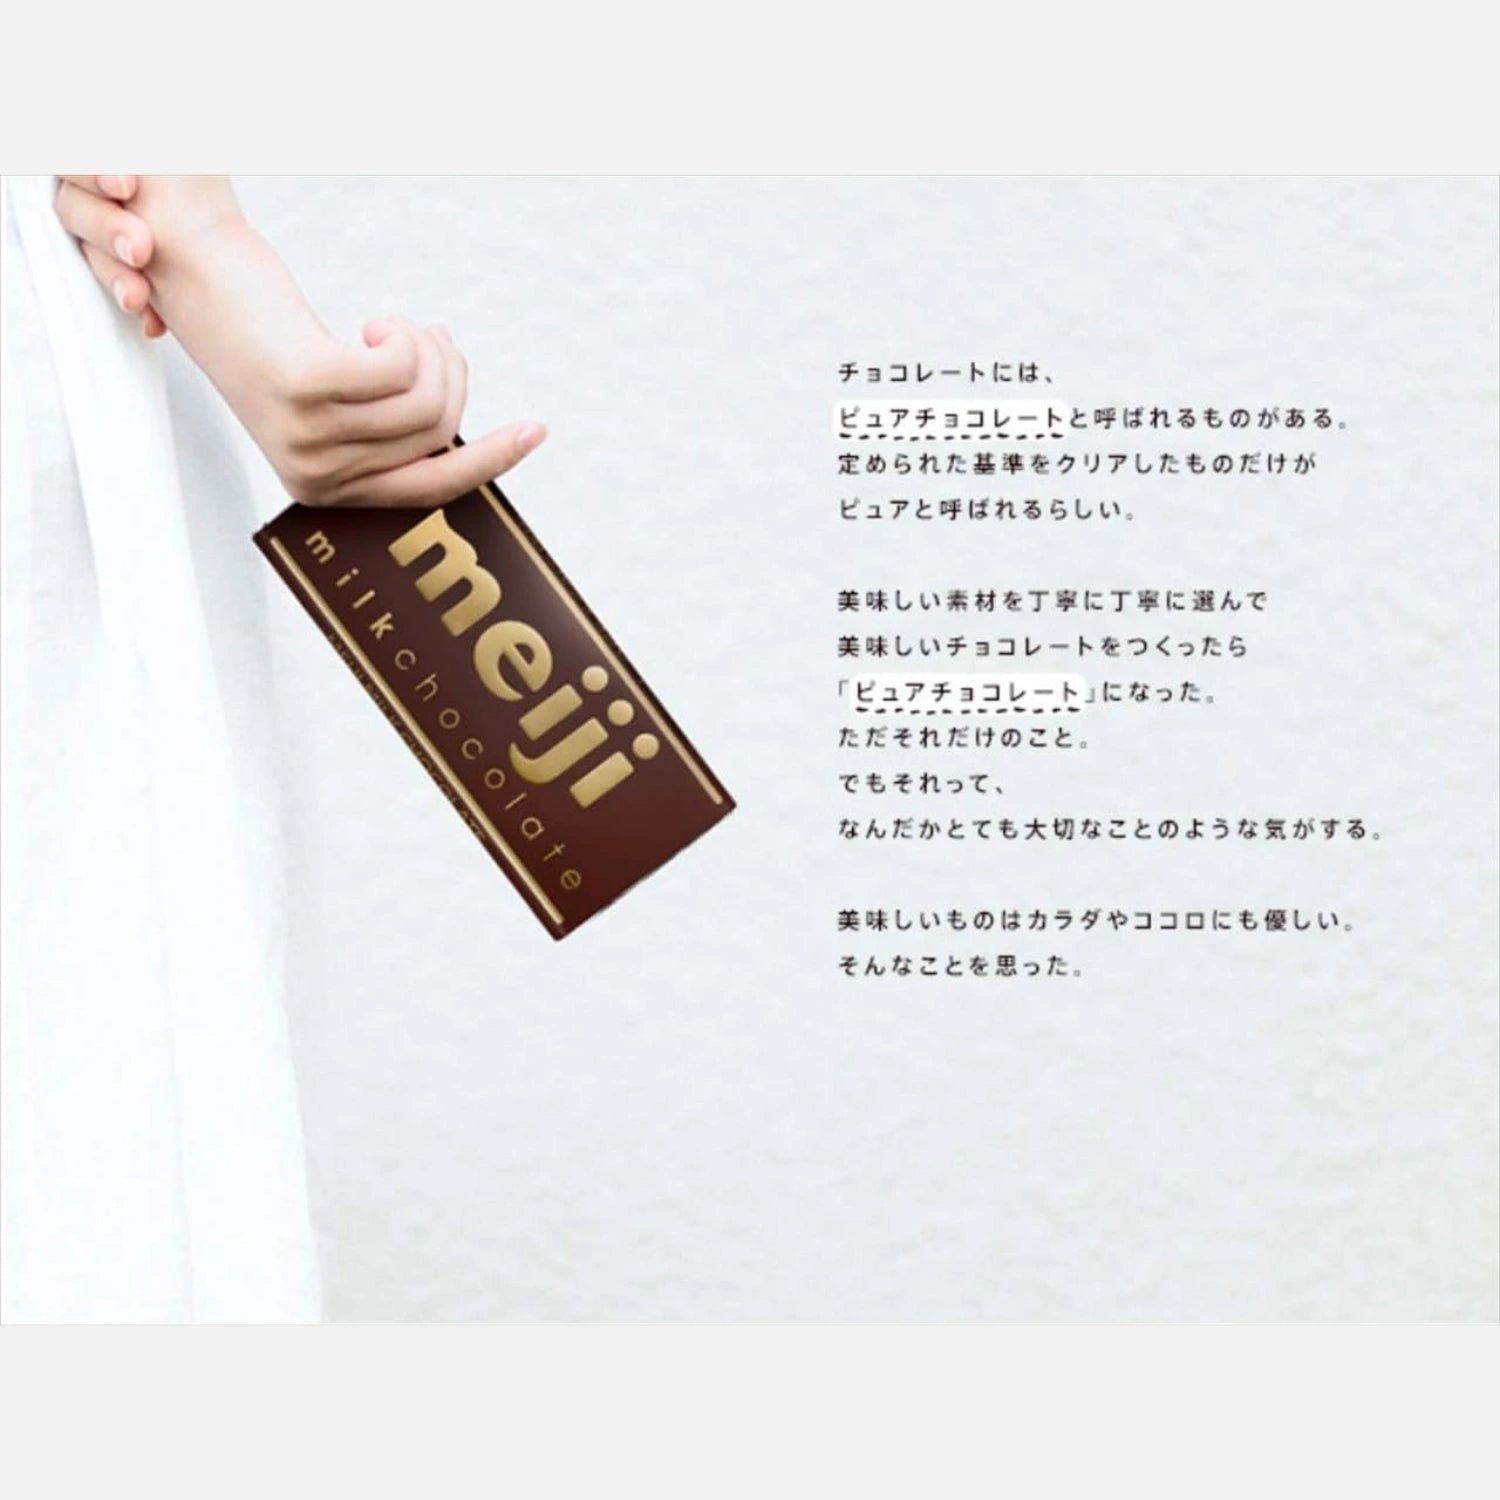 Meiji Milk Chocolate 50g - Buy Me Japan